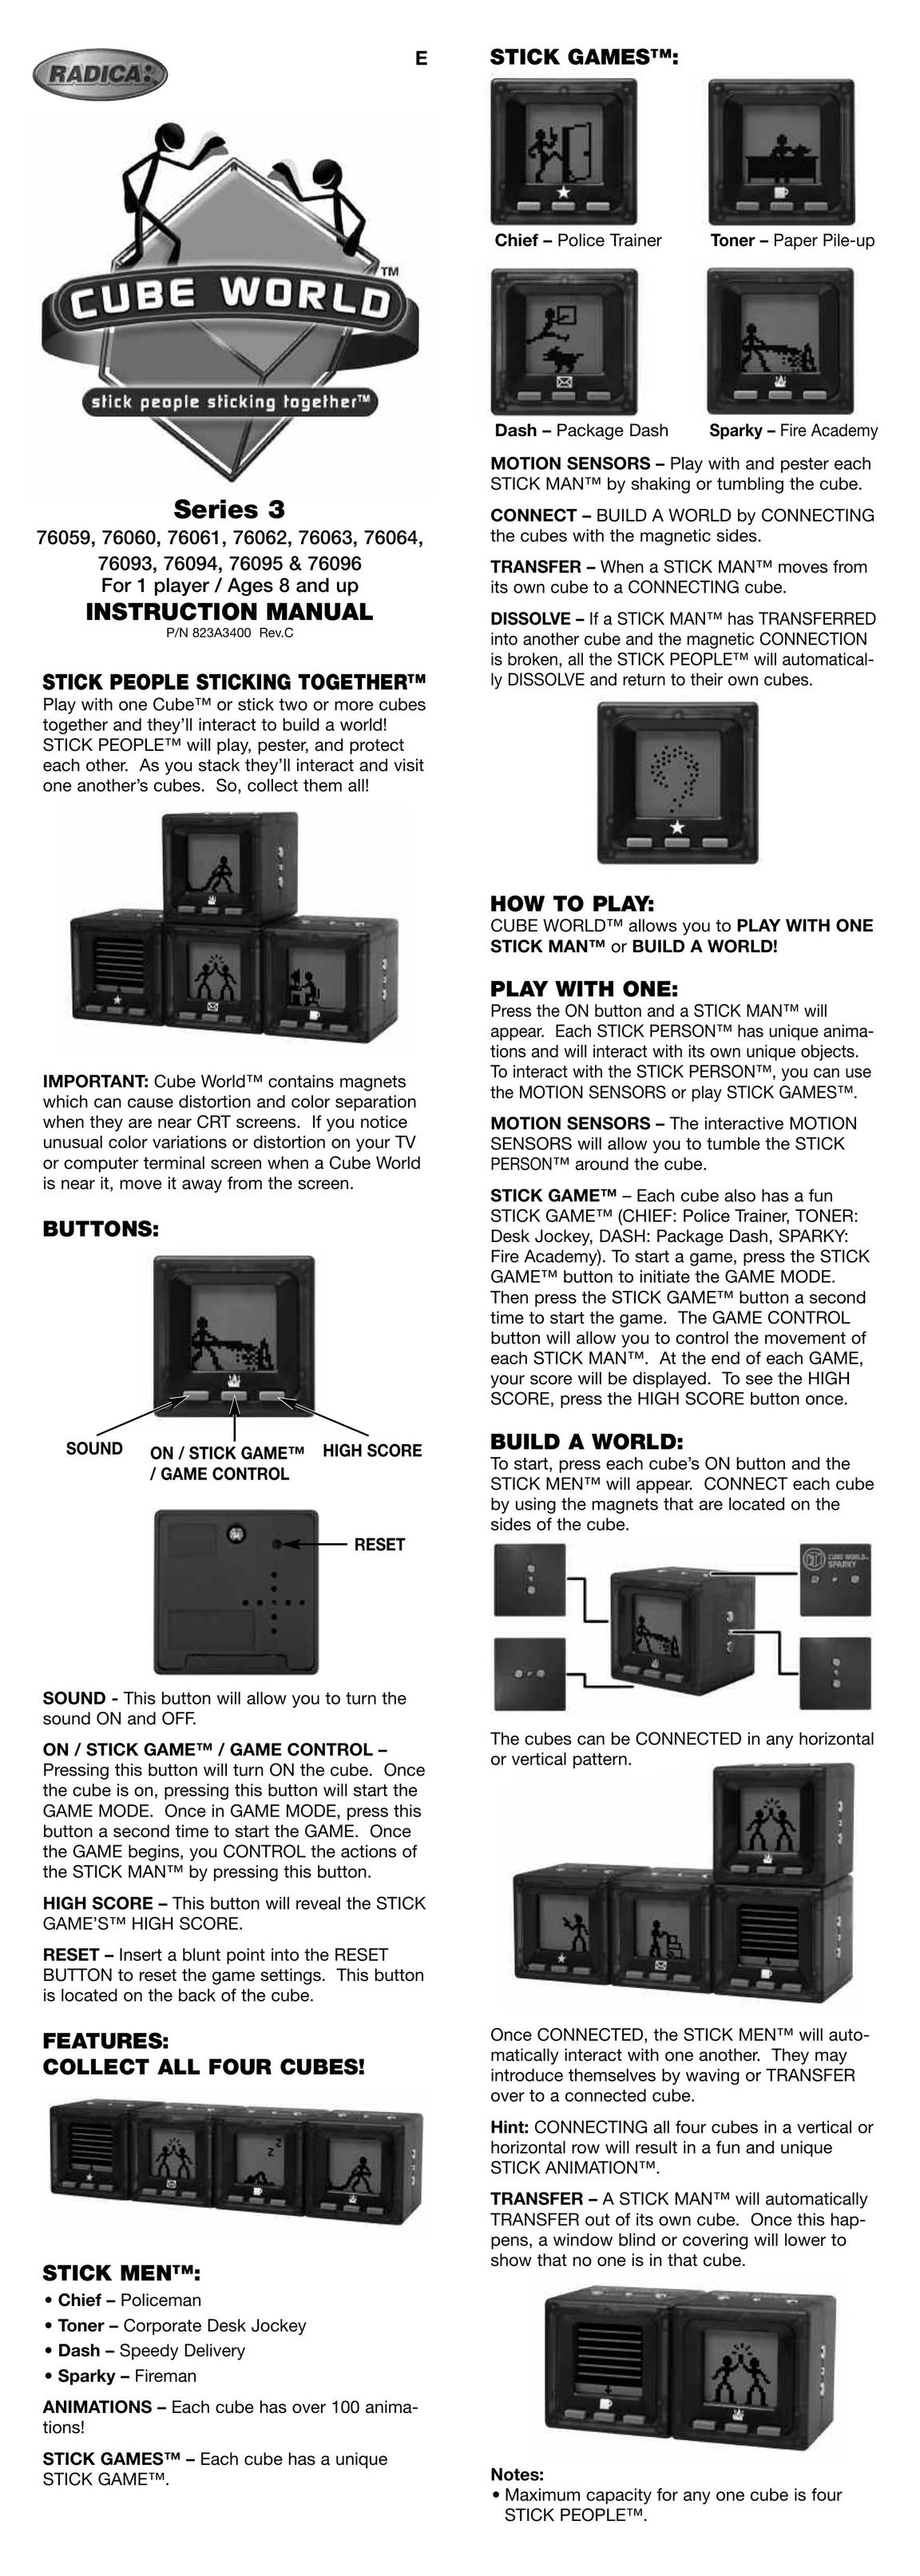 Radica Games 76063 Handheld Game System User Manual